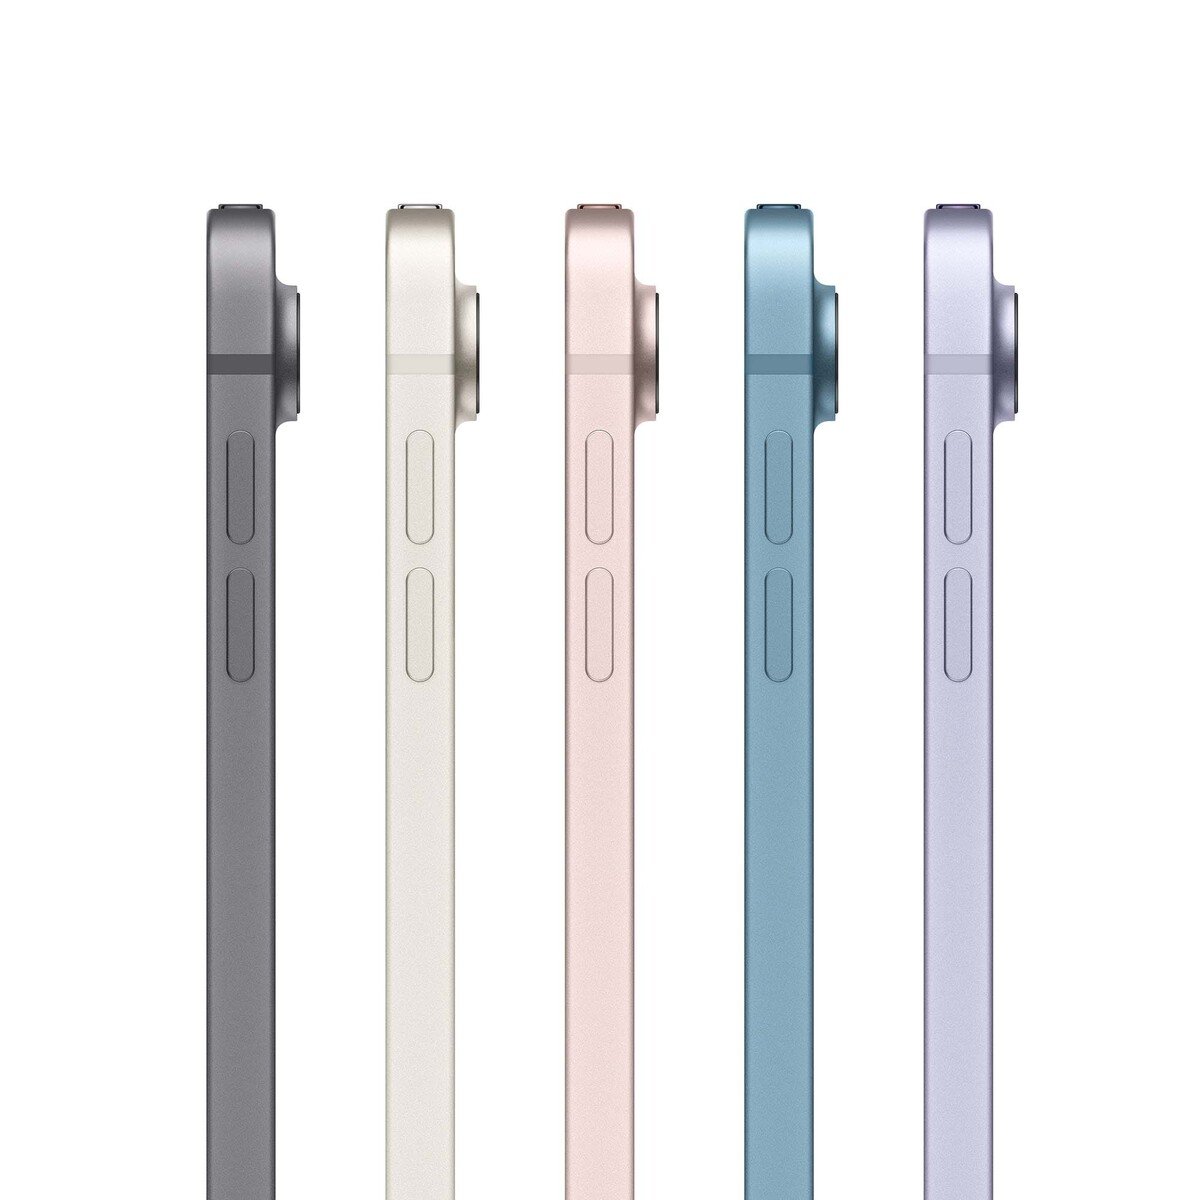 Apple iPad Air (2022) 10.9-inchch Wi-Fi + Cellular(5G) 64GB Starlight